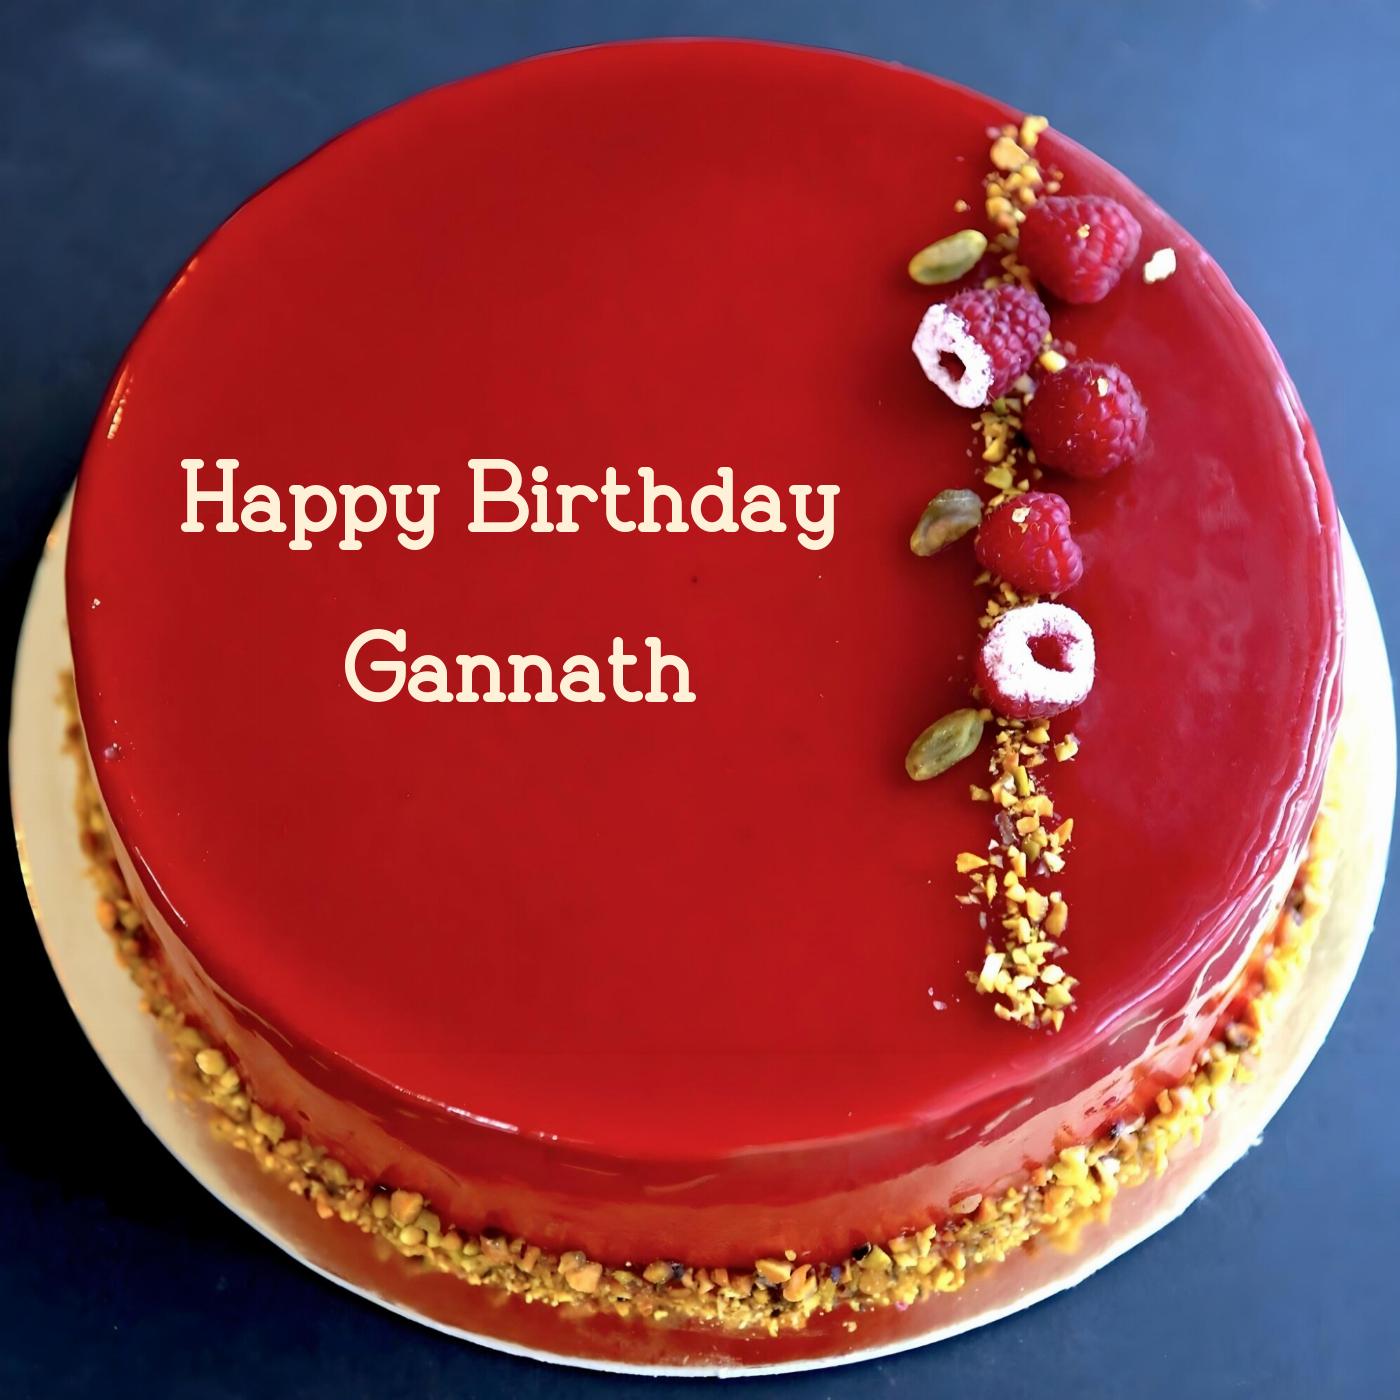 Happy Birthday Gannath Red Raspberry Cake